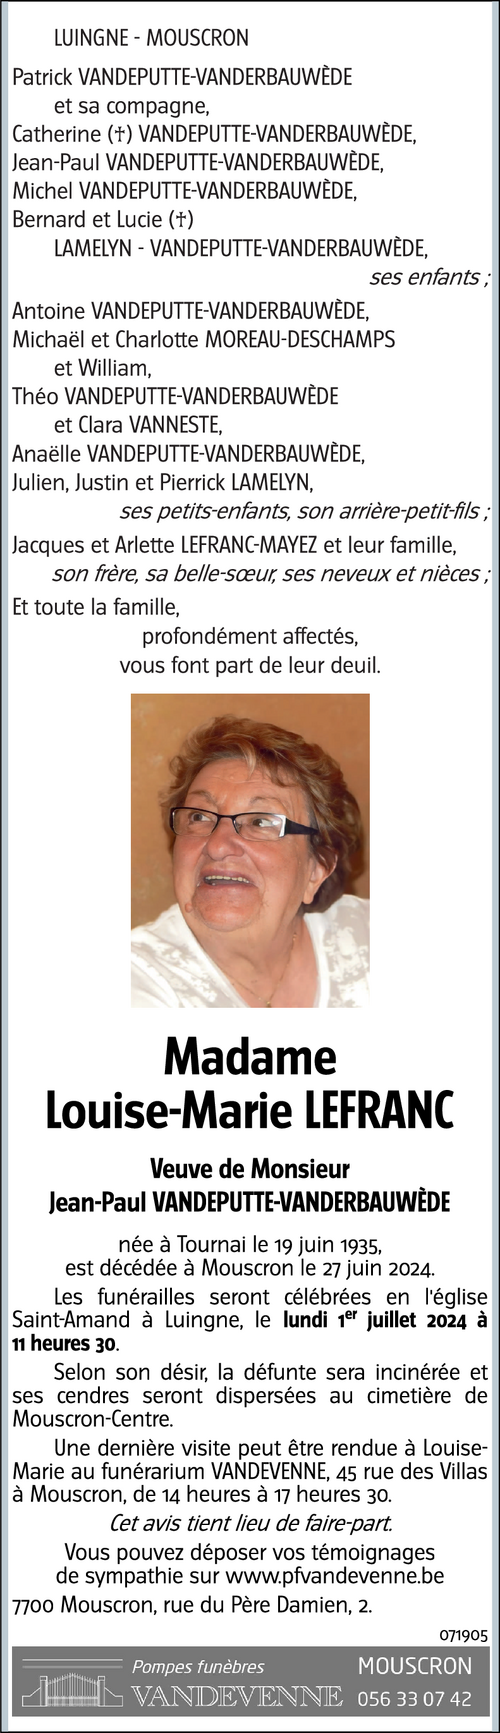 Louise-Marie LEFRANC